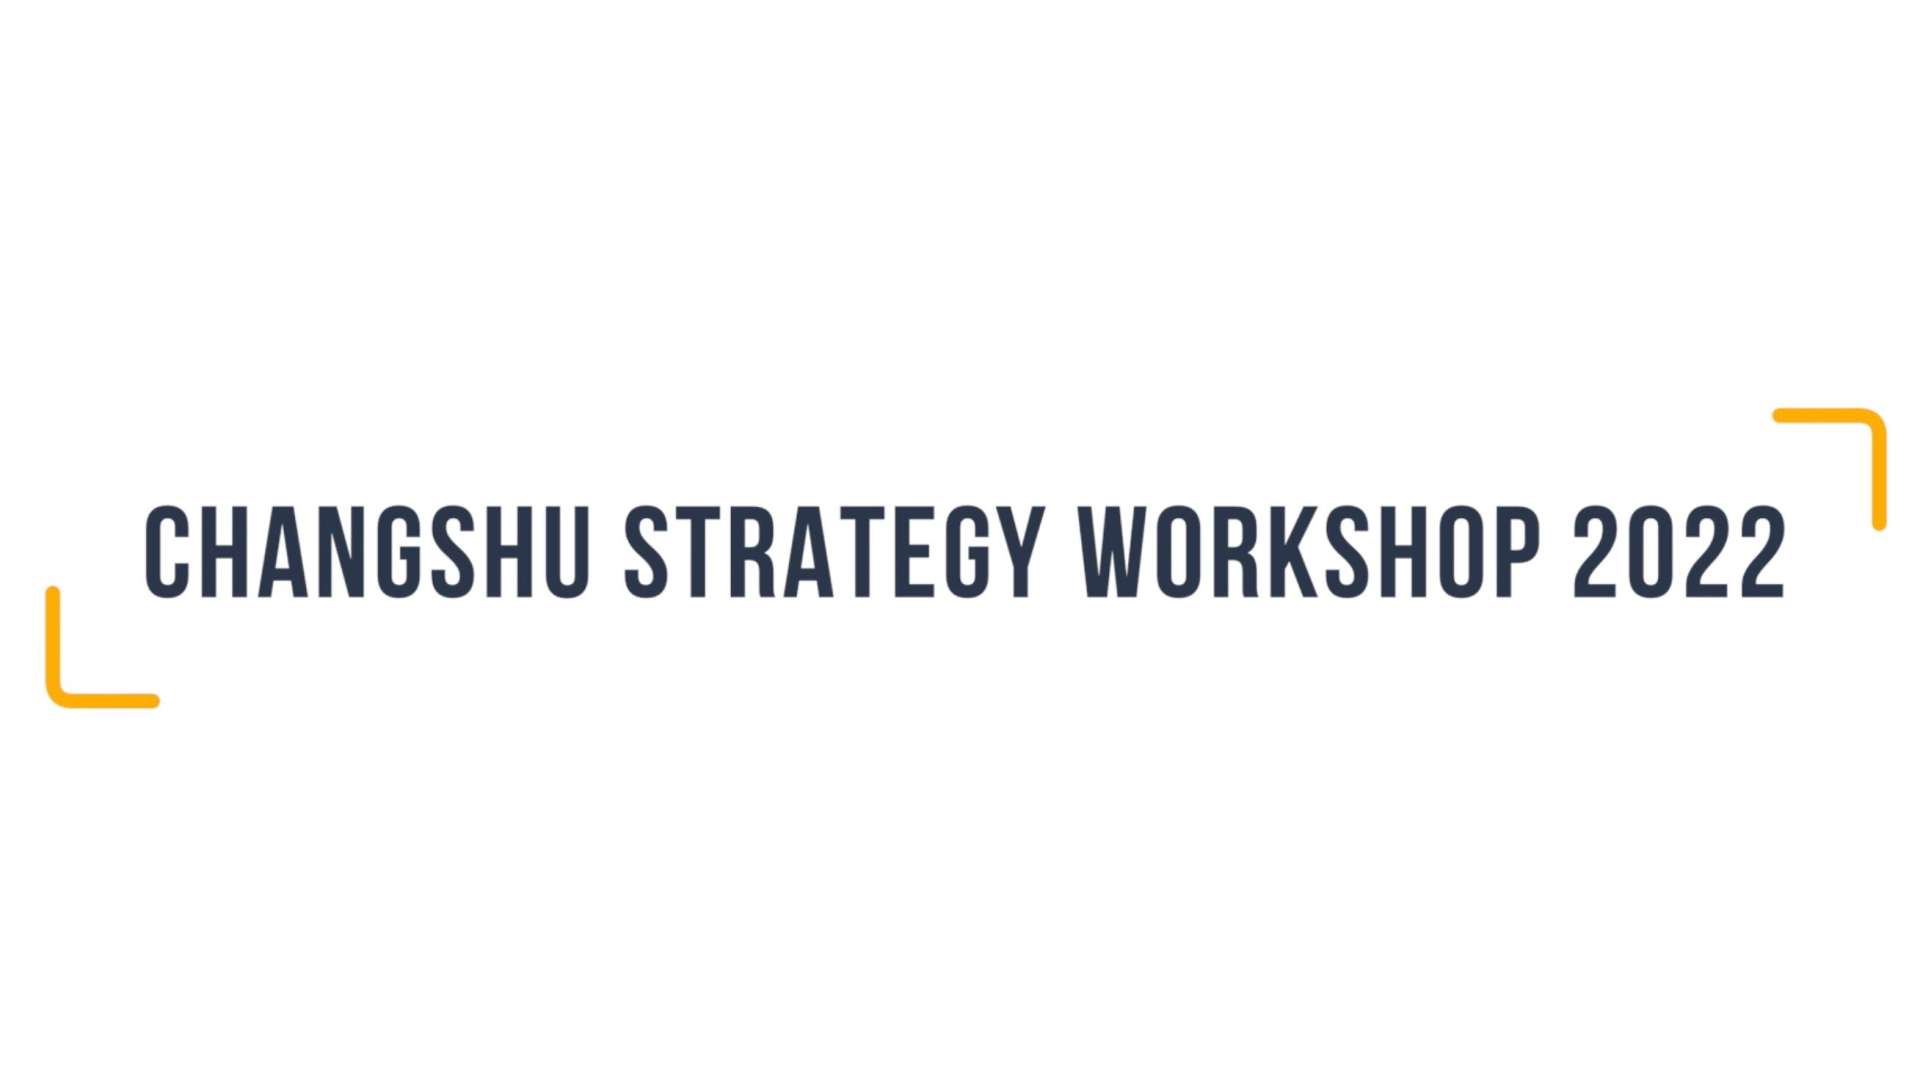 CHANGSHU STRATEGY WORKSHOP 2022